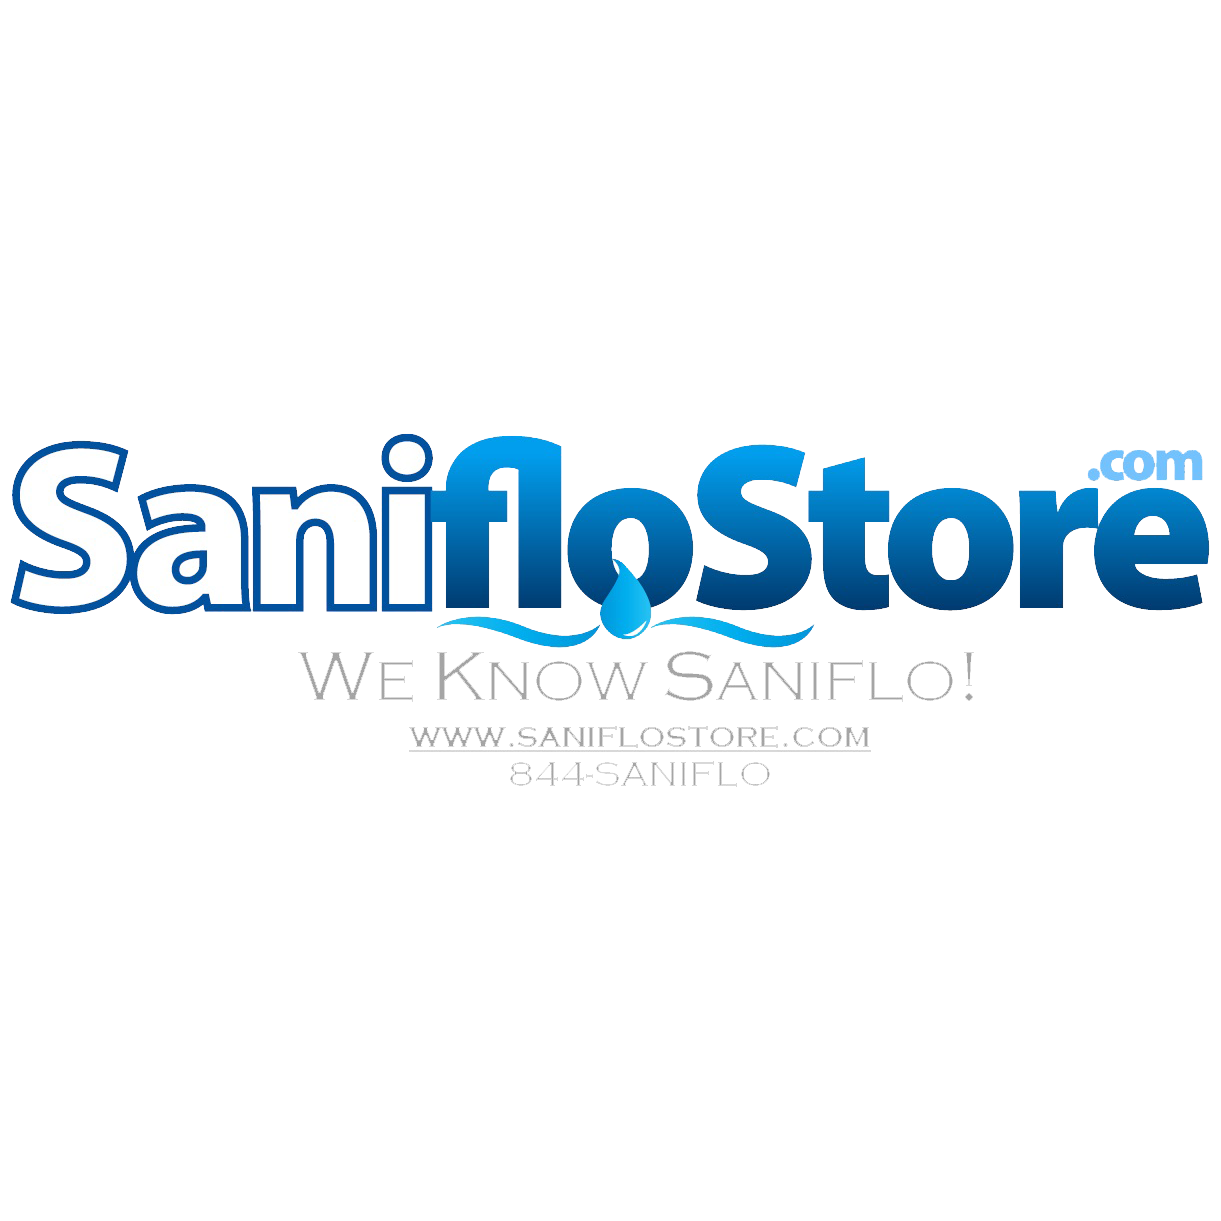 saniflo-store-logo